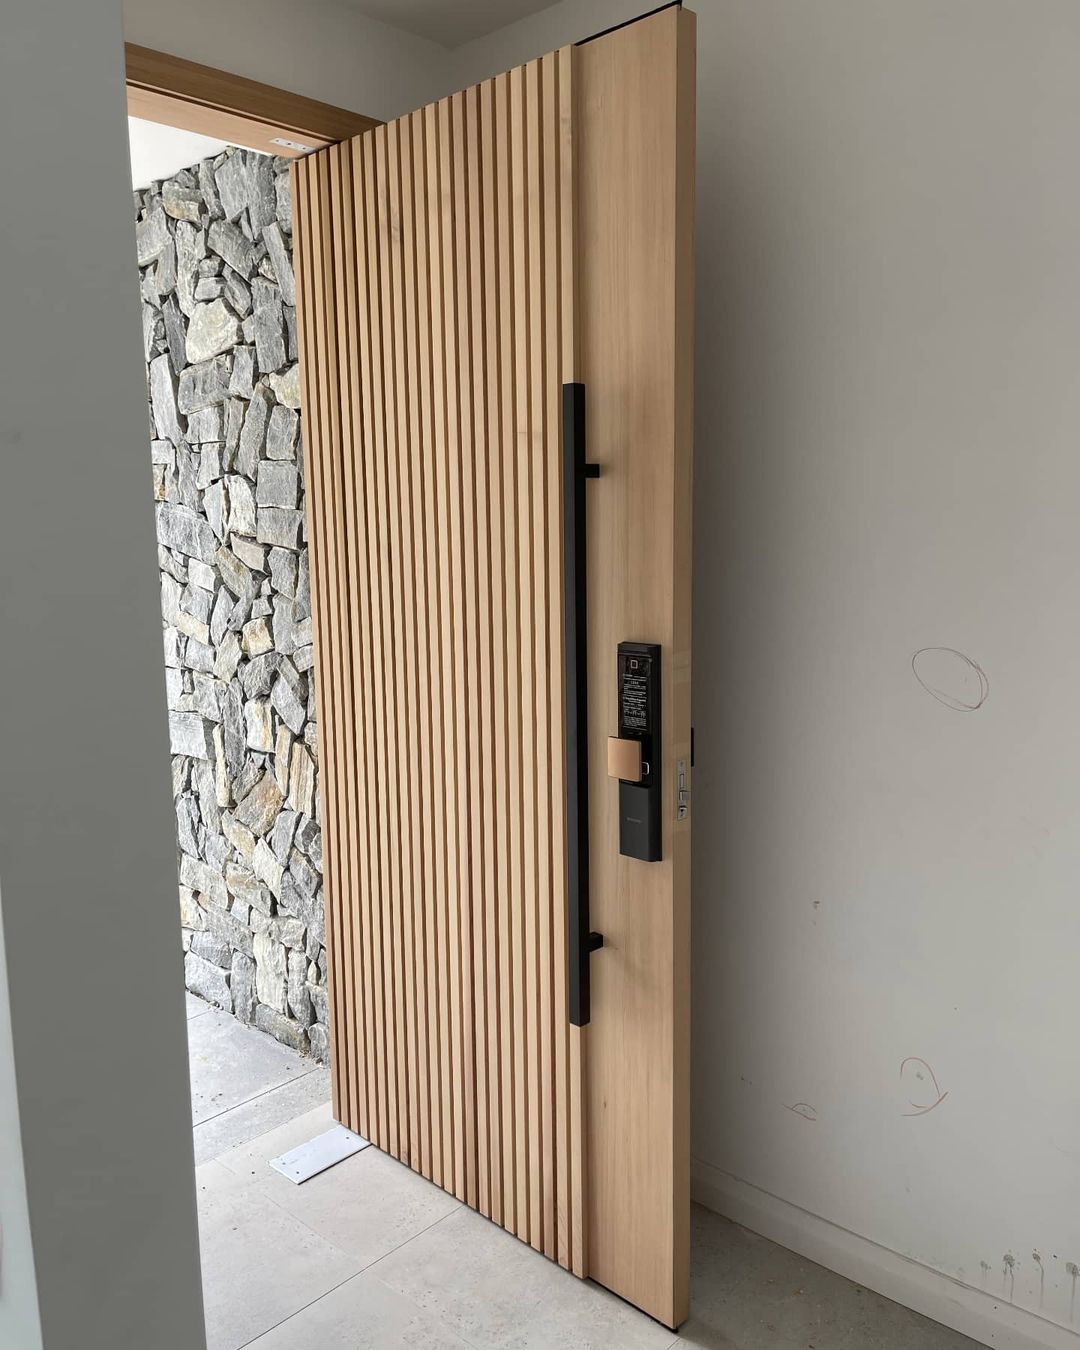 Flush Door Designs